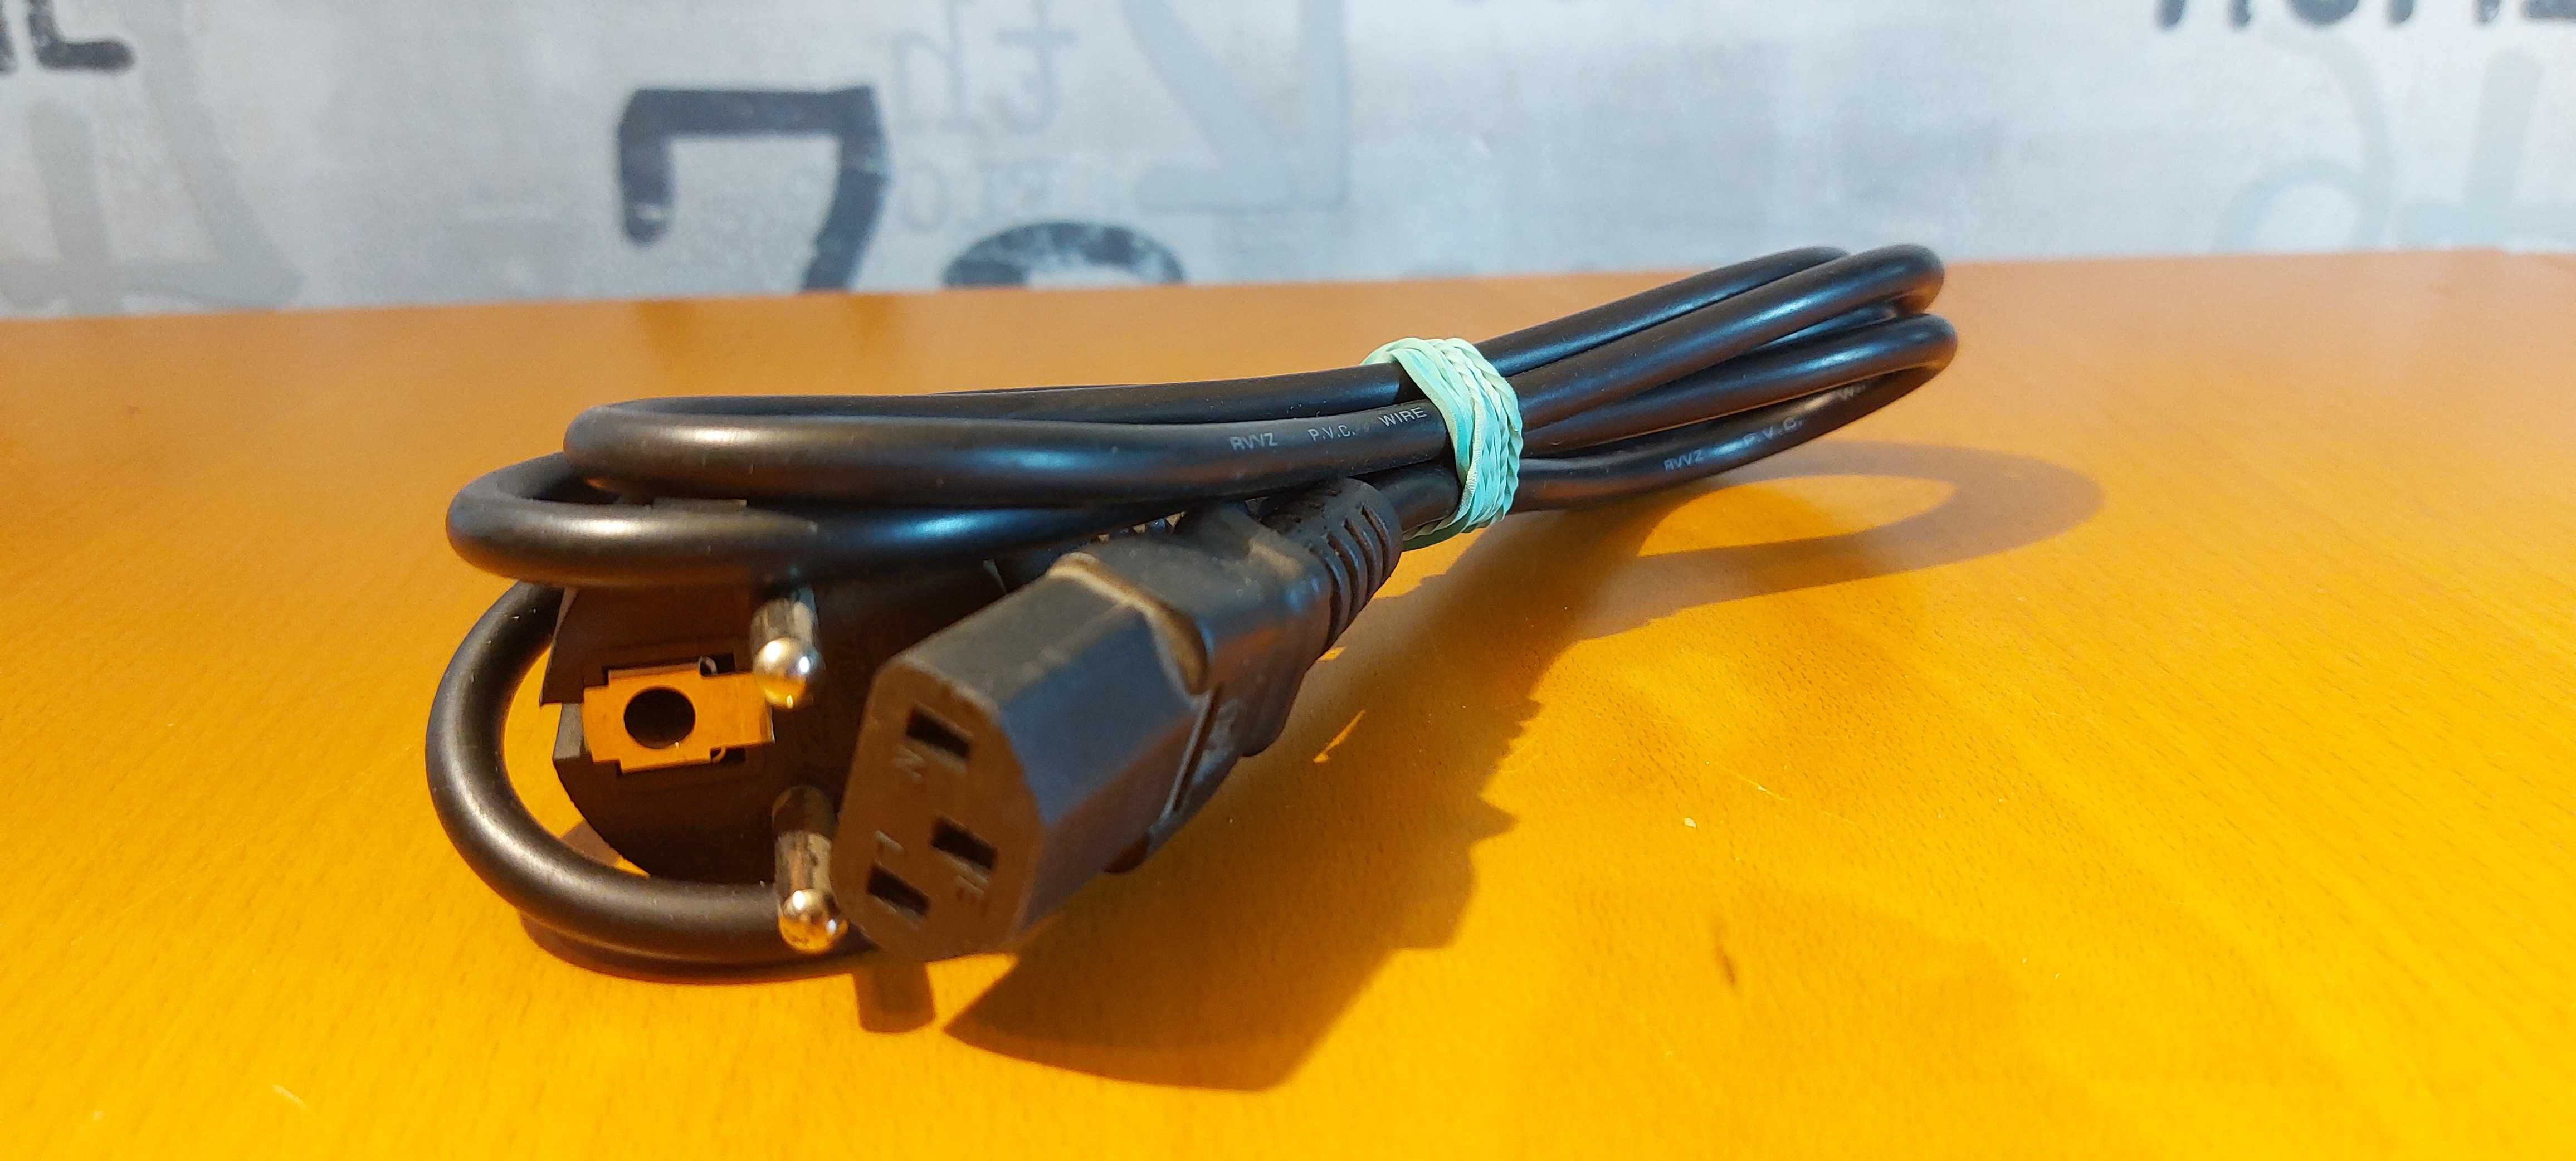 Kable zasilające do komputera / monitora IEC C13